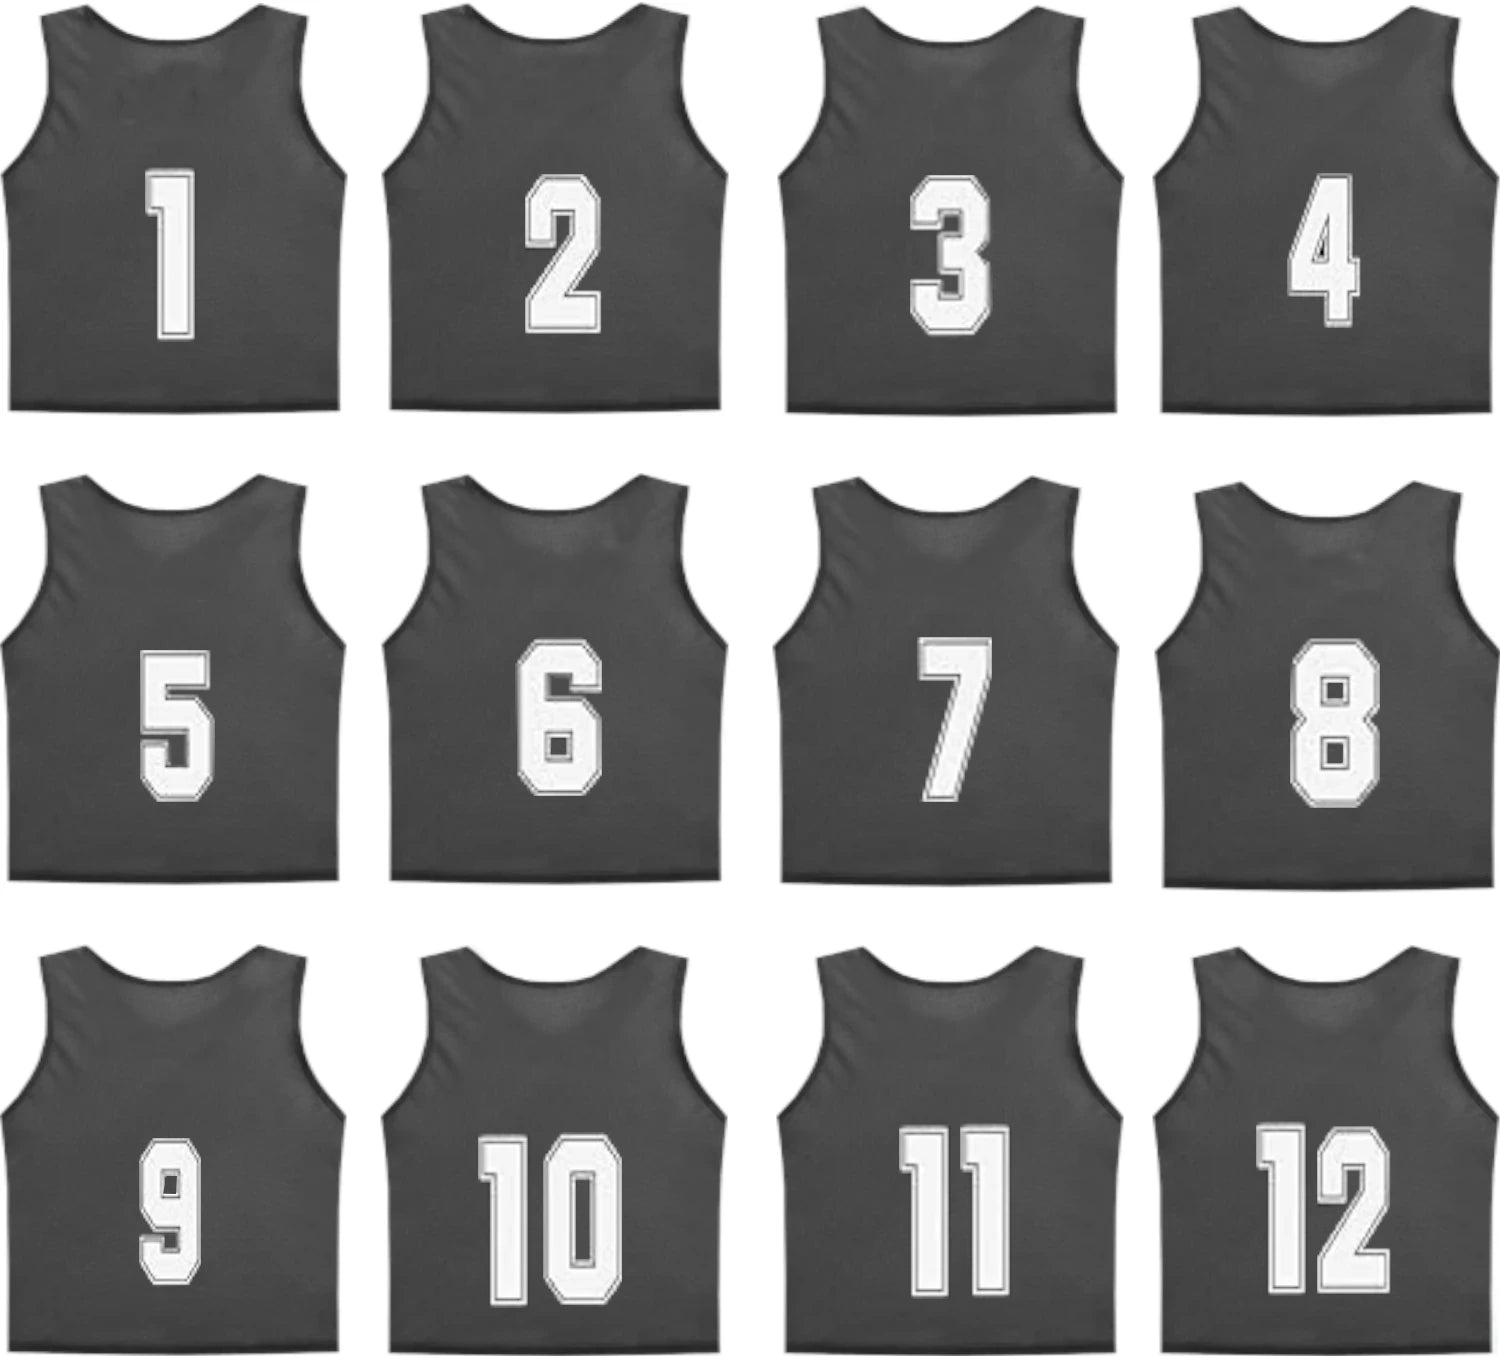 Team Practice Scrimmage Vests Sport Pinnies Training Bibs Numbered (1-12)